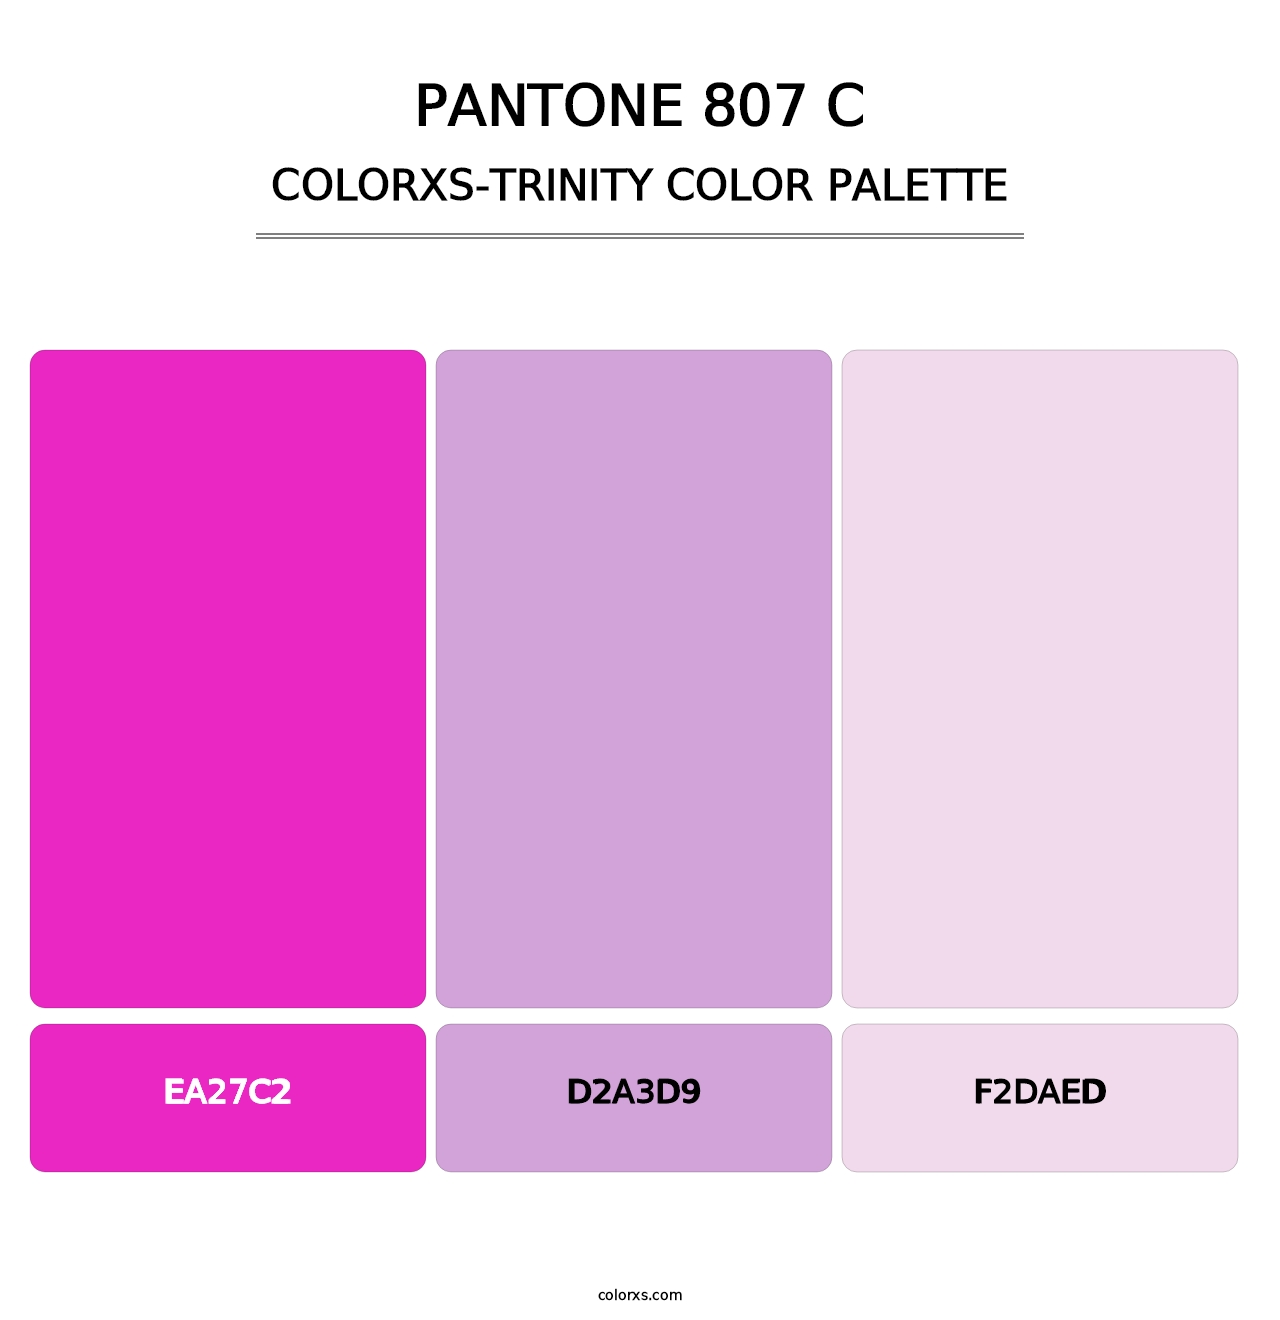 PANTONE 807 C - Colorxs Trinity Palette